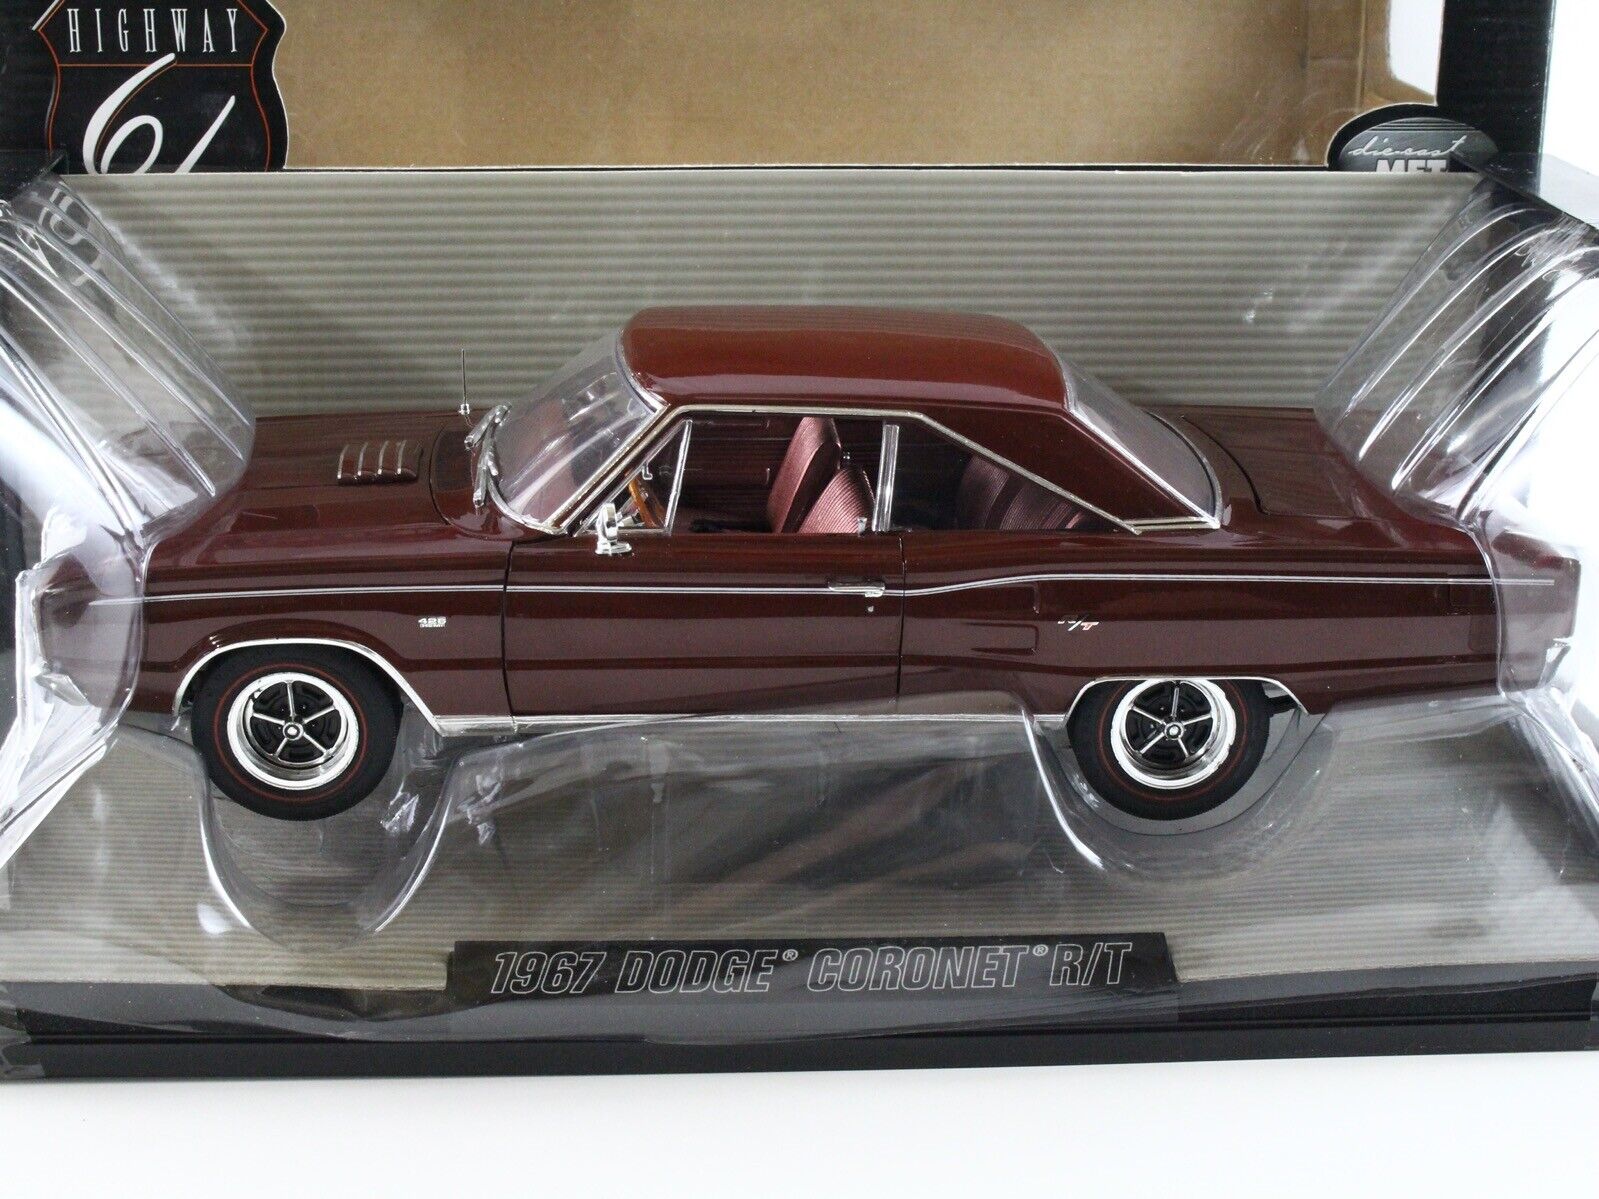 1967 Dodge Coronet R/T Dark Red Highway 61 1:18 Scale 50284